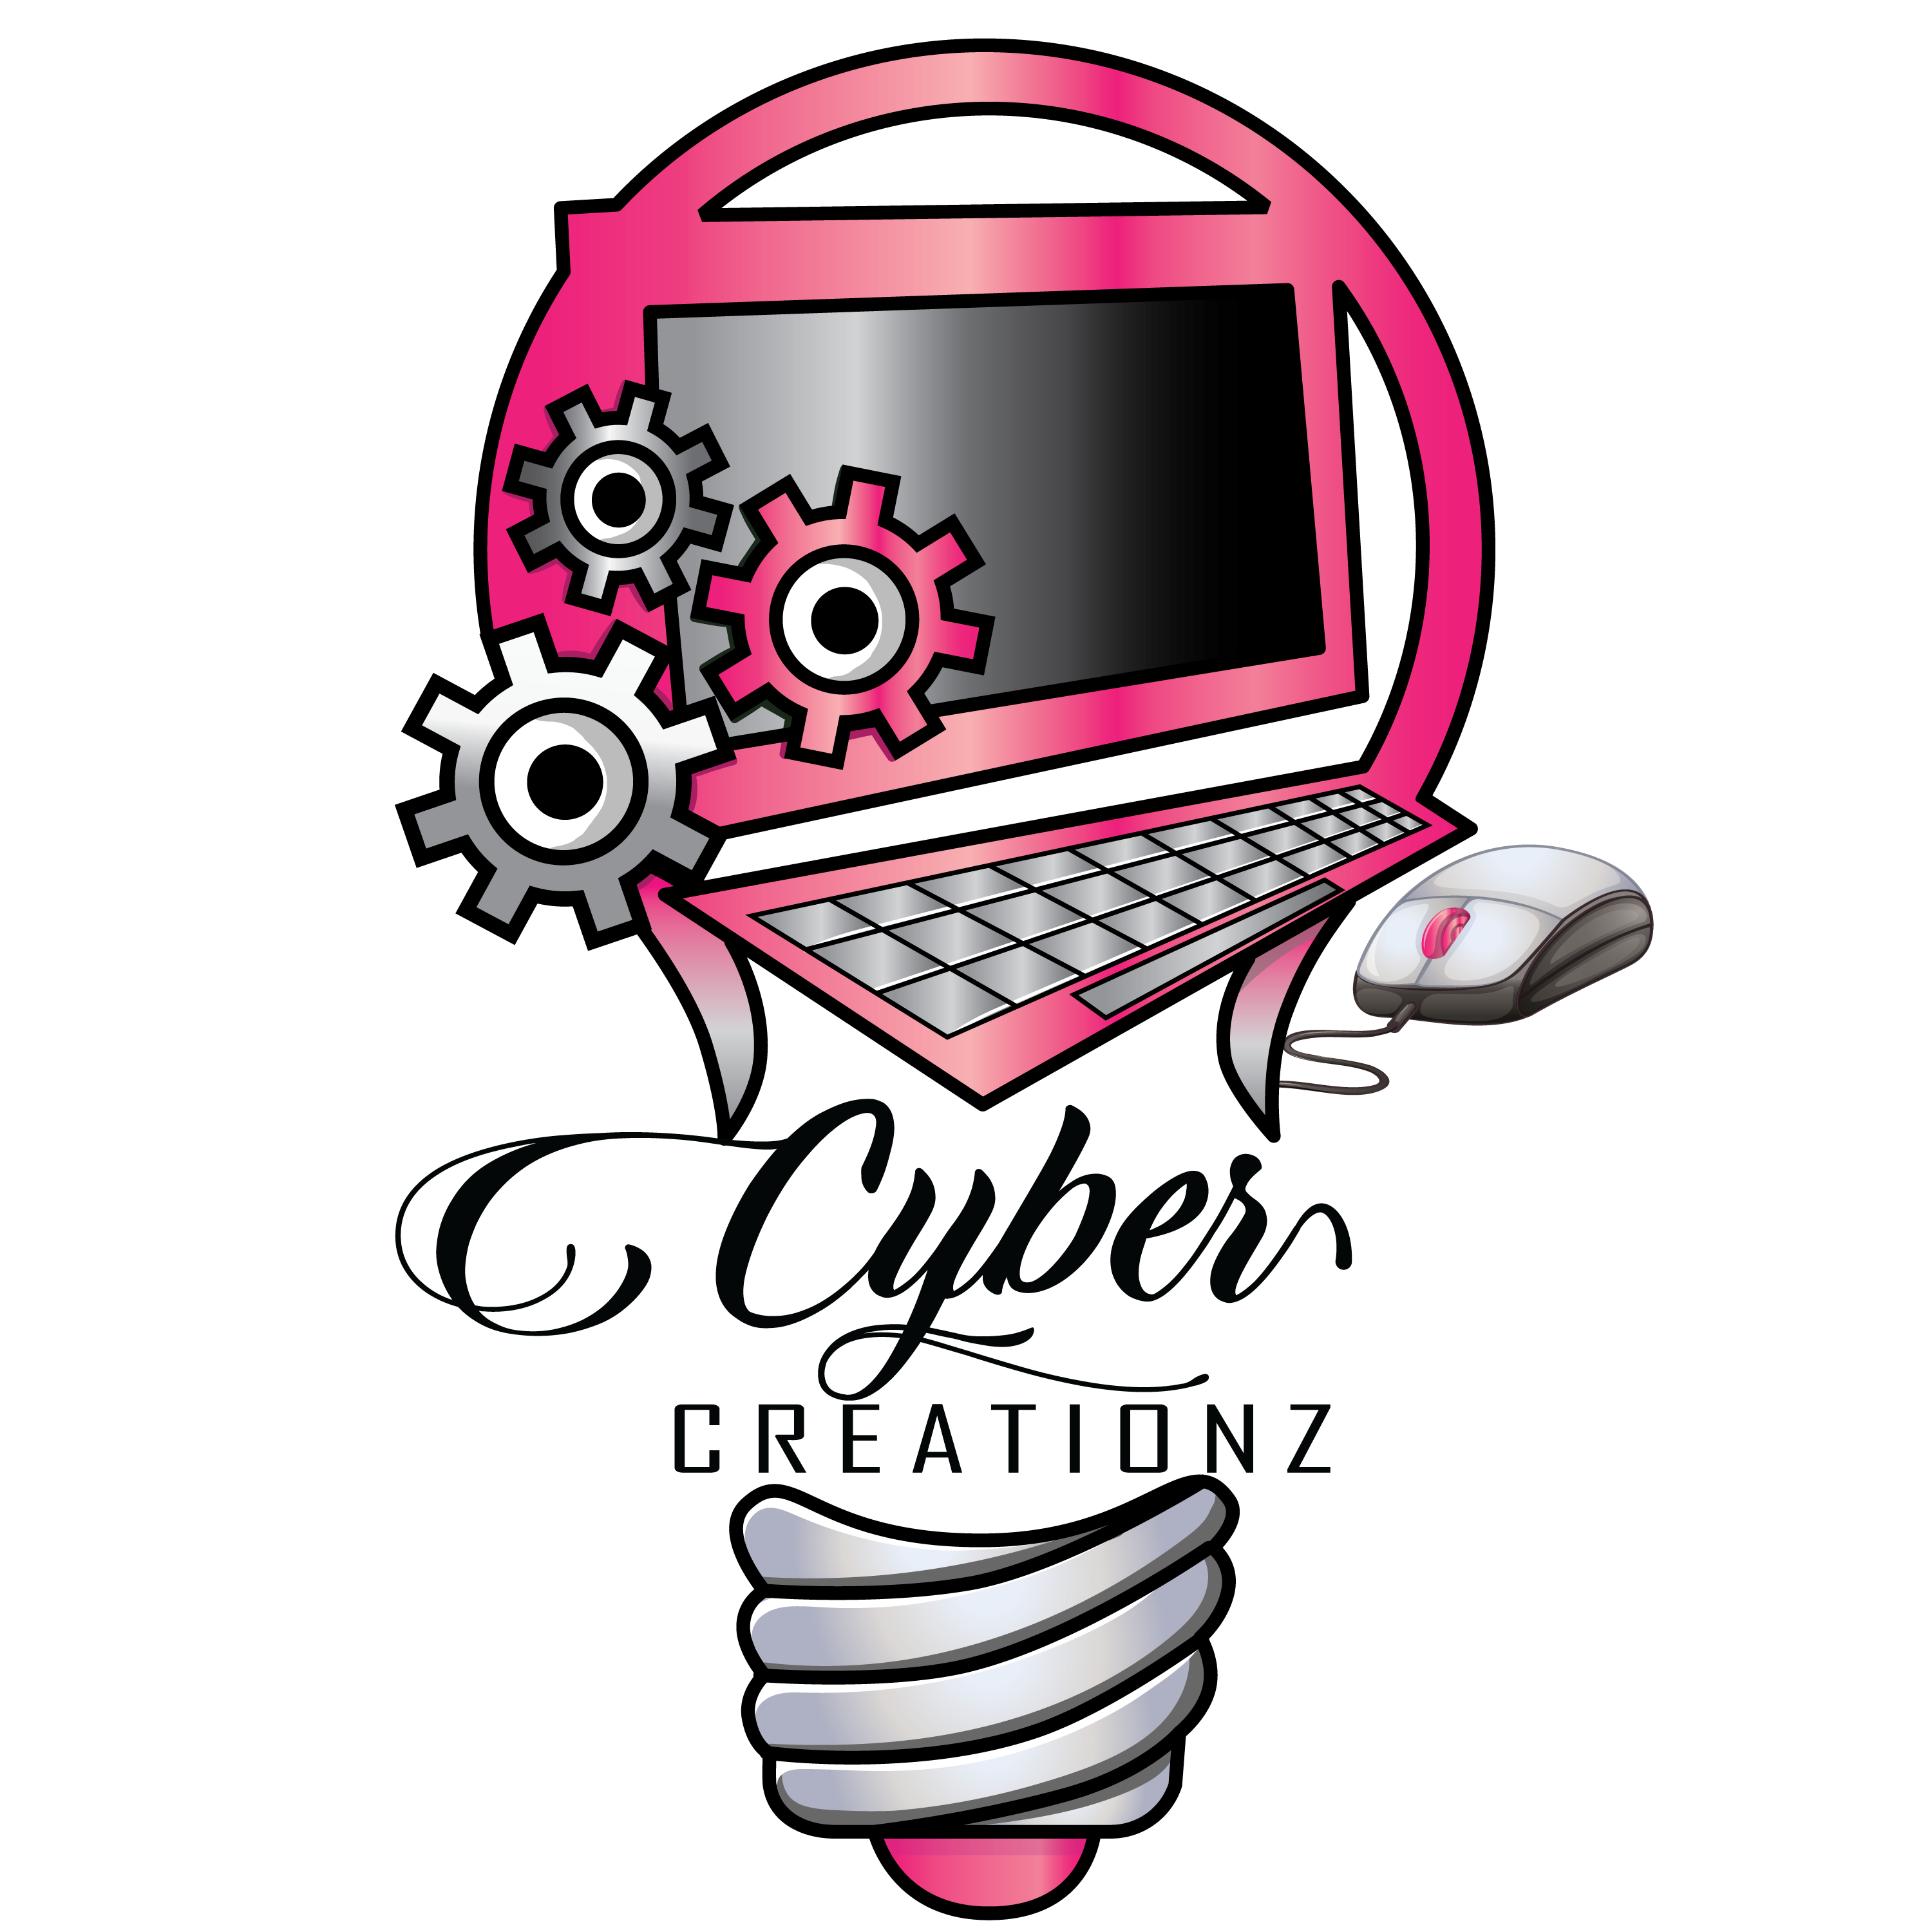 Cyber Creationz